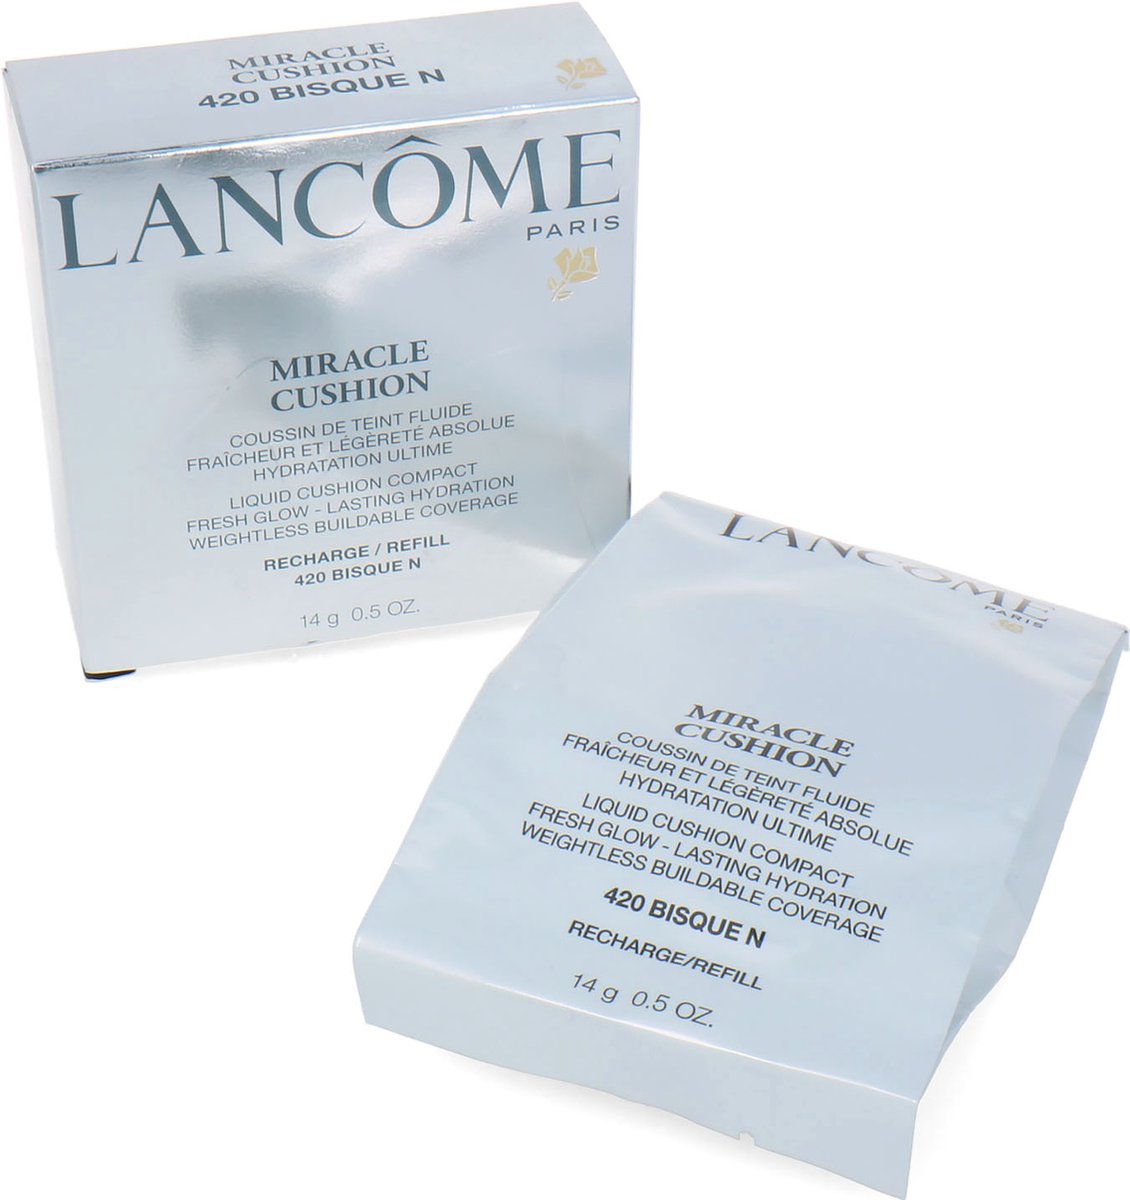 Lancôme Miracle Cushion Compact Foundation - 420 Bisque N (Refill)